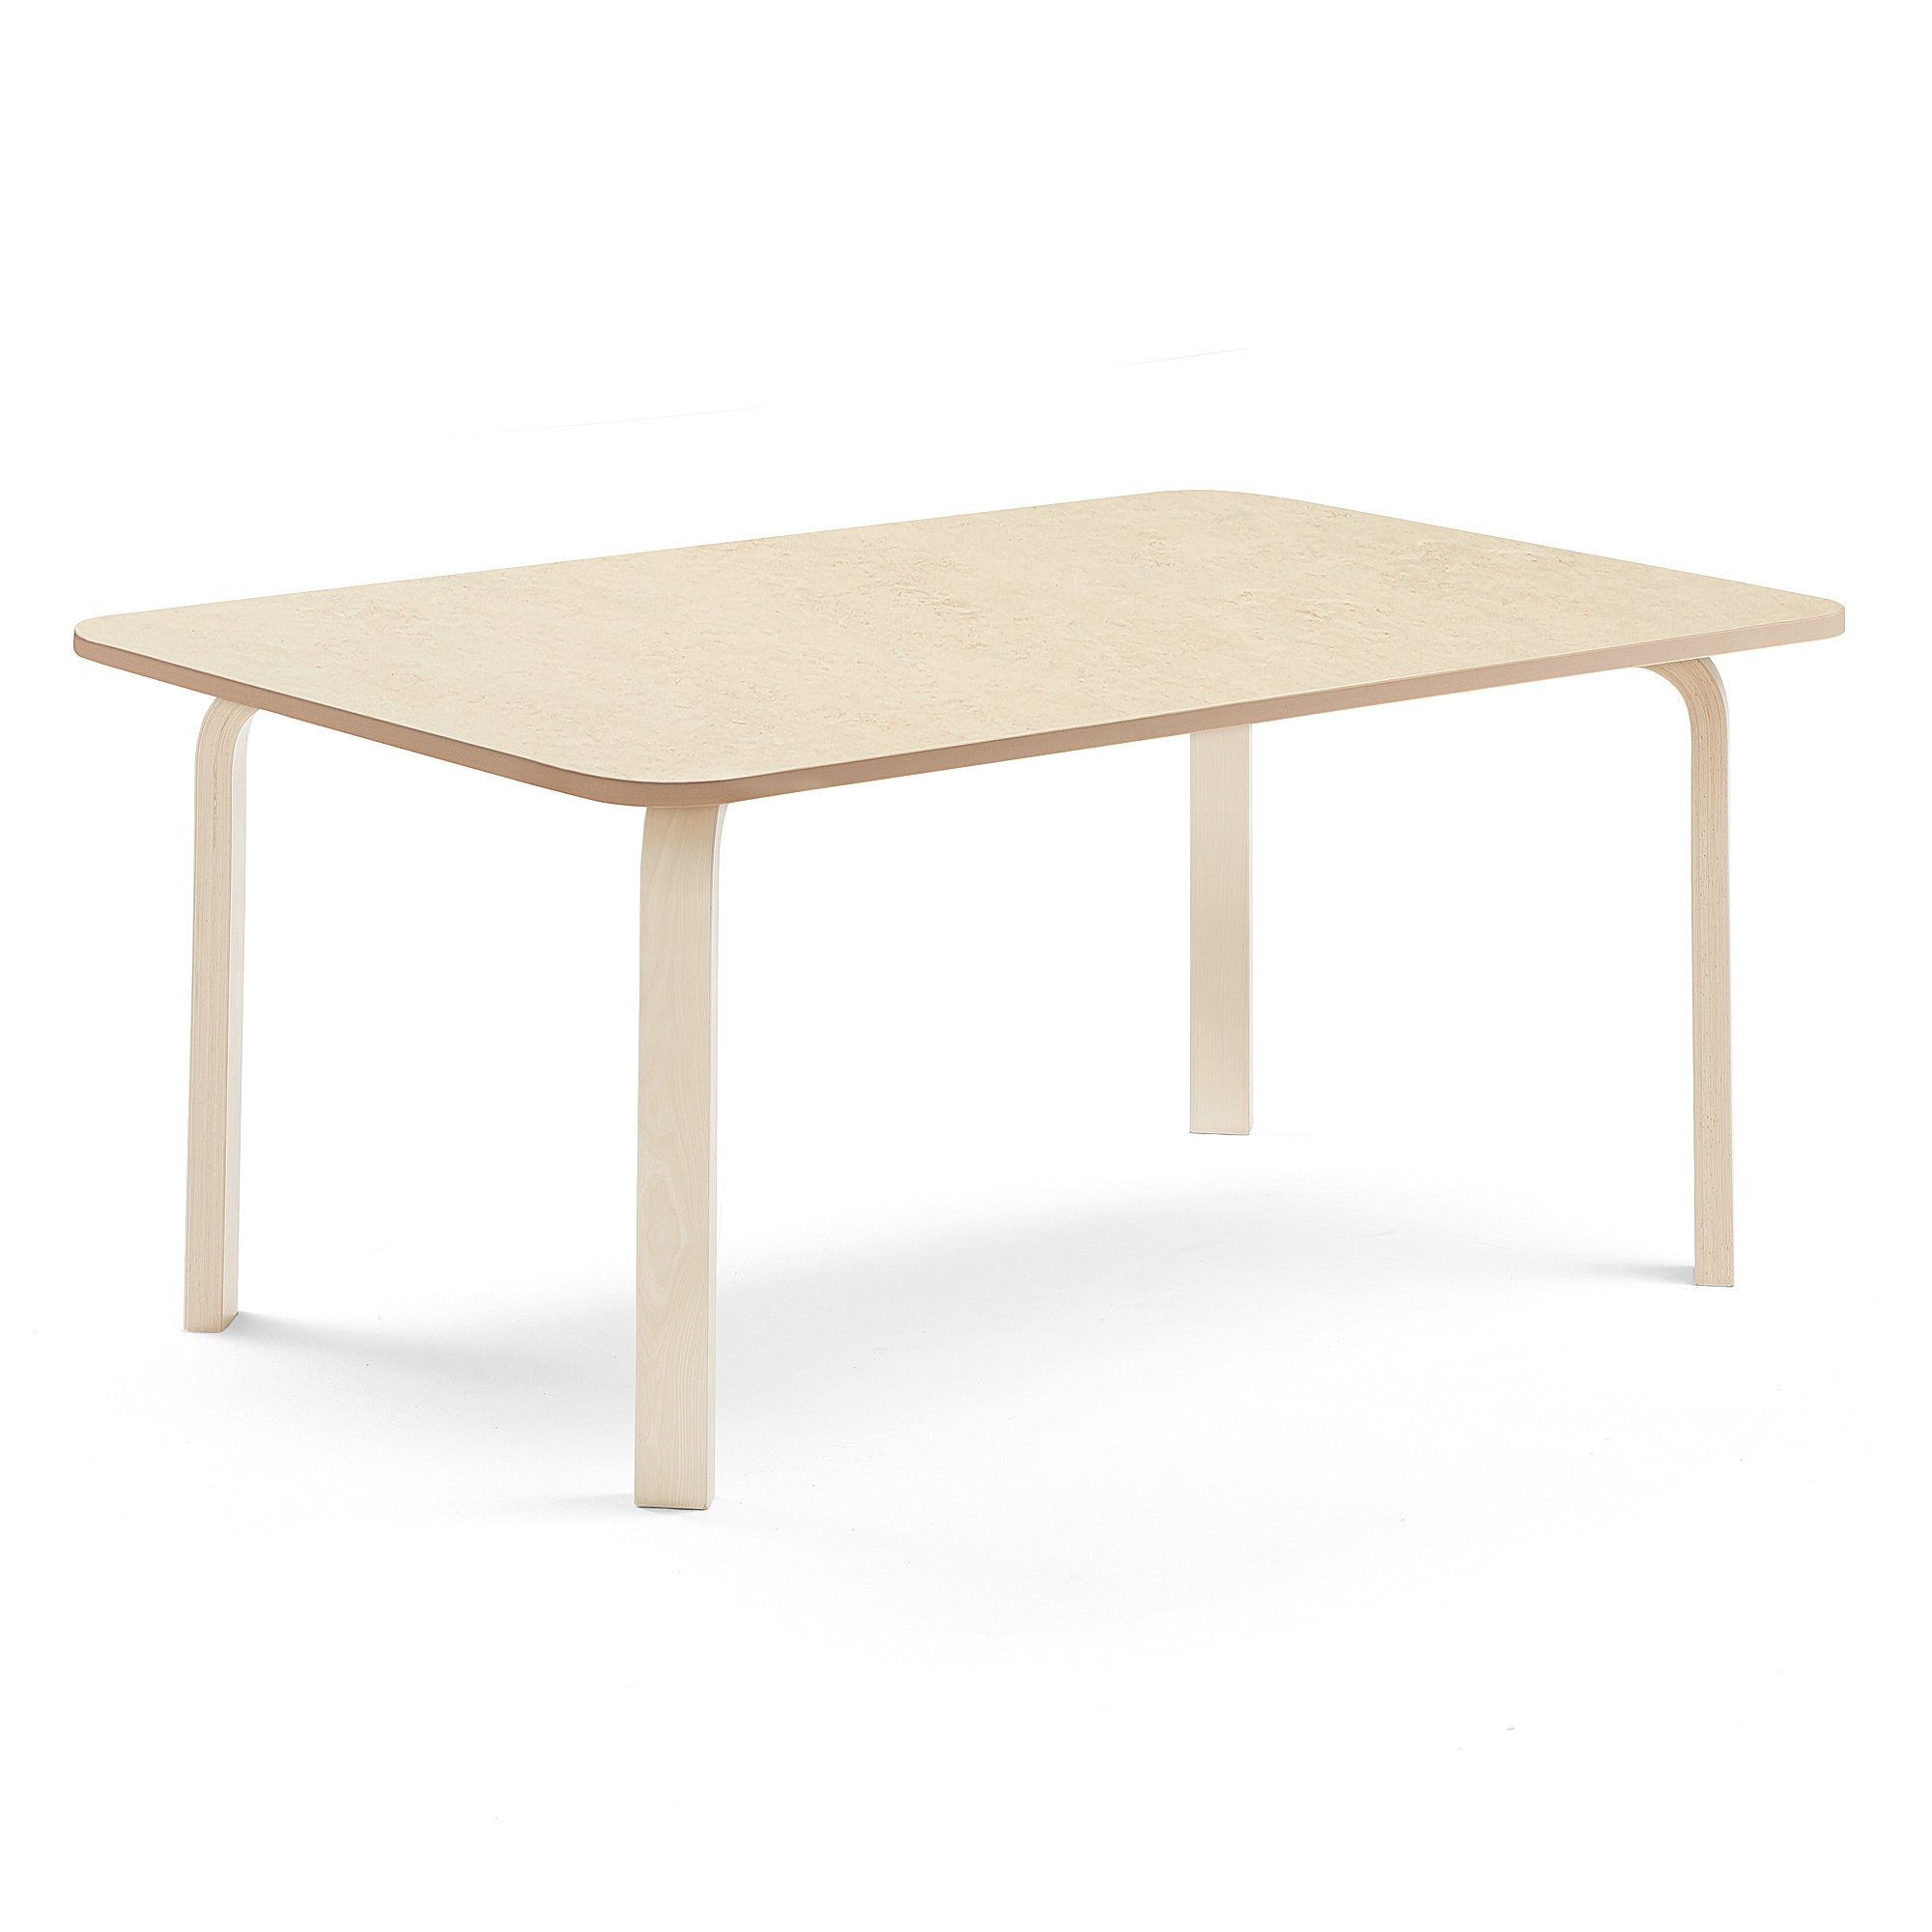 Stůl ELTON, 1800x700x590 mm, bříza, akustické linoleum, béžová